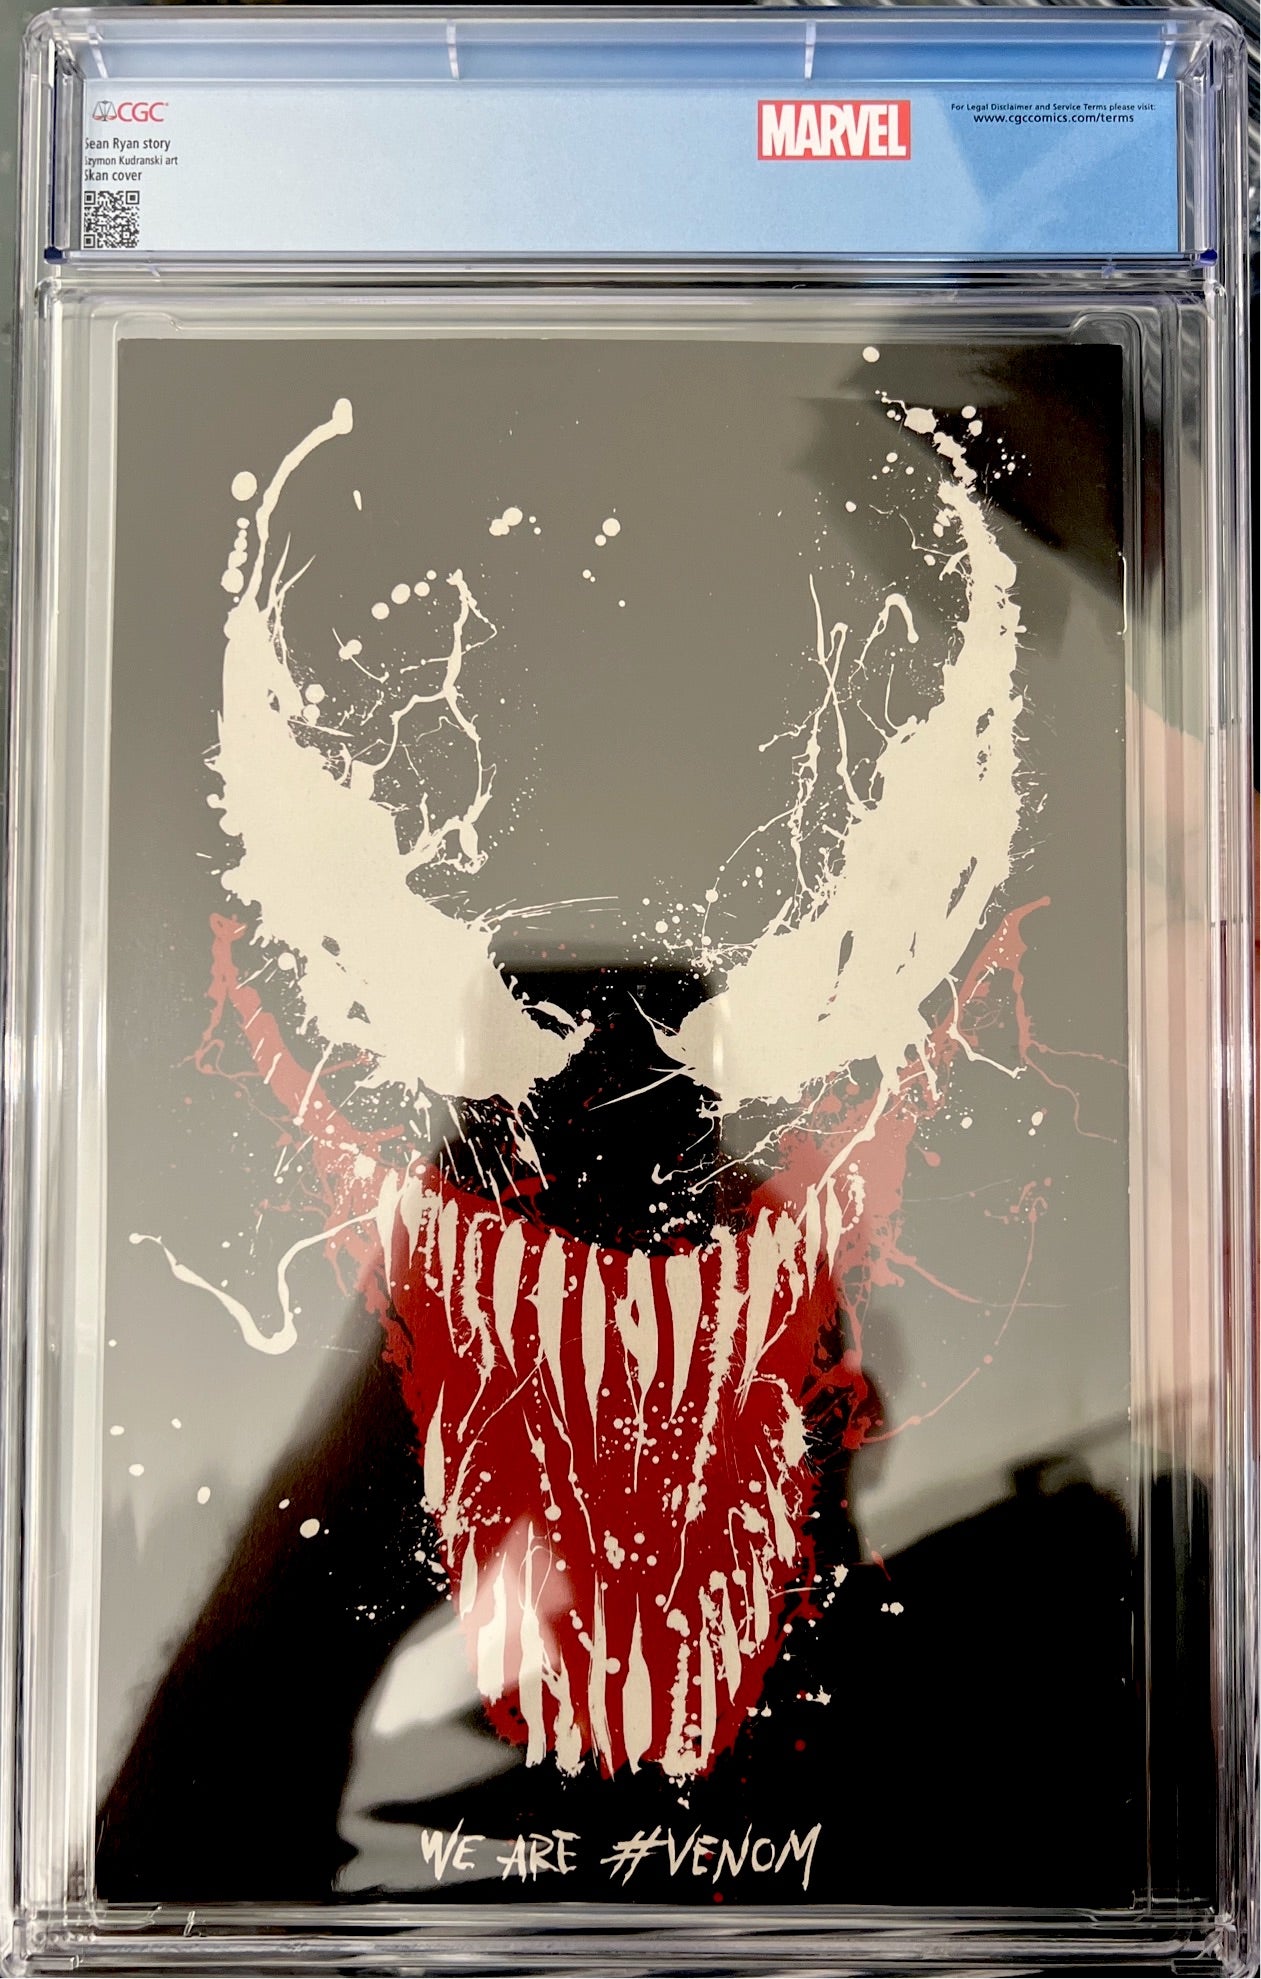 Venom #1 CGC 8.0 AMC Edition